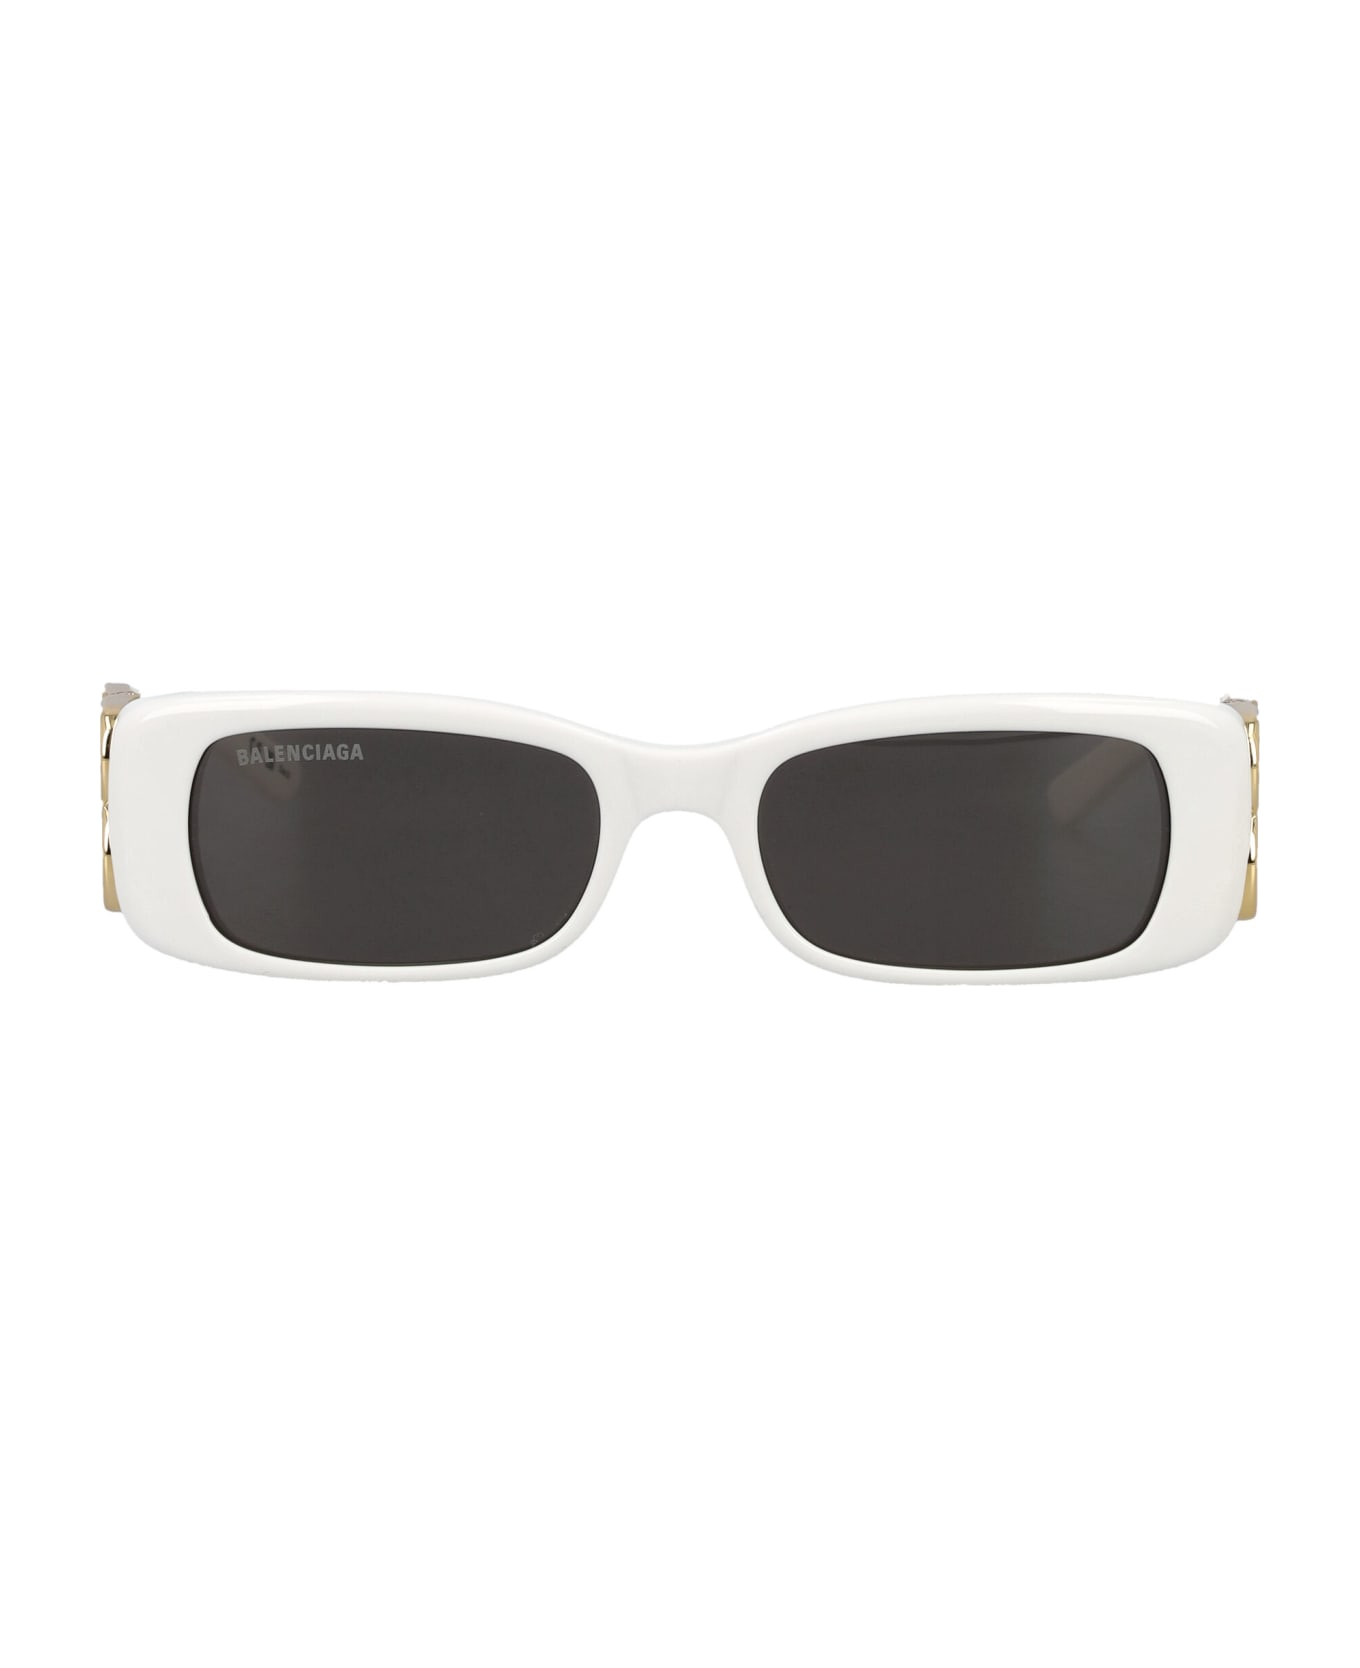 Balenciaga Eyewear Dynasty Rectangle Sunglasses - White